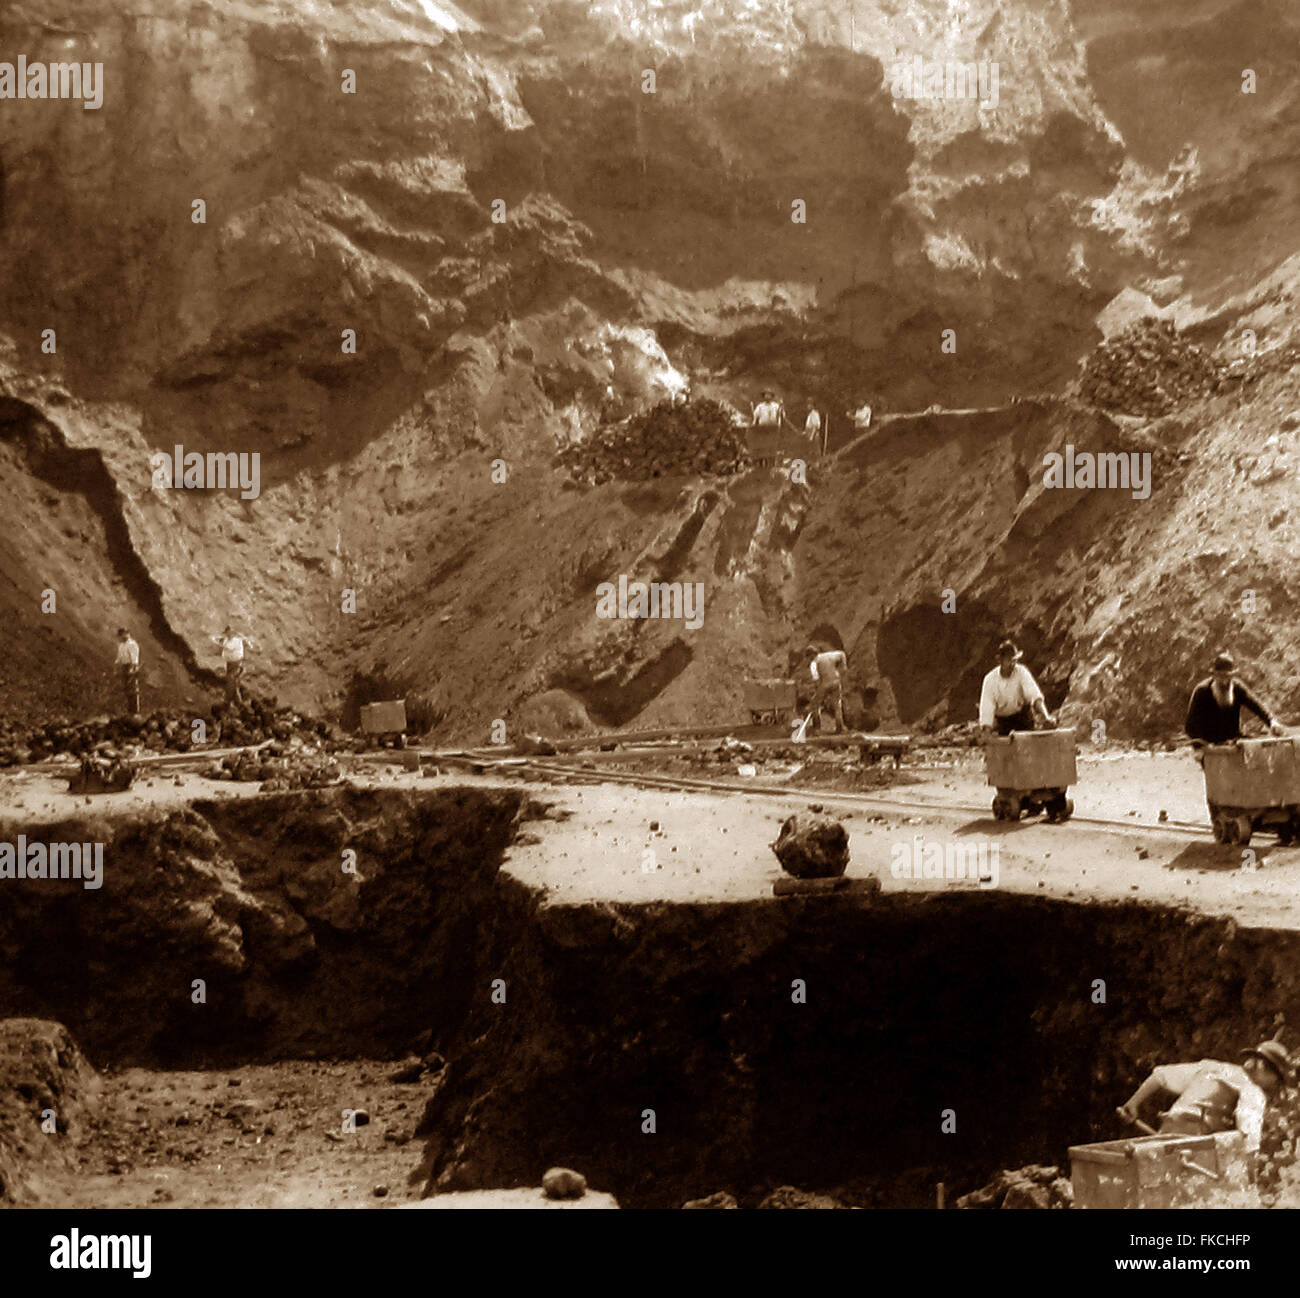 Mount Bischoff Tin Mine, Tasmania - Victorian period Stock Photo - Alamy